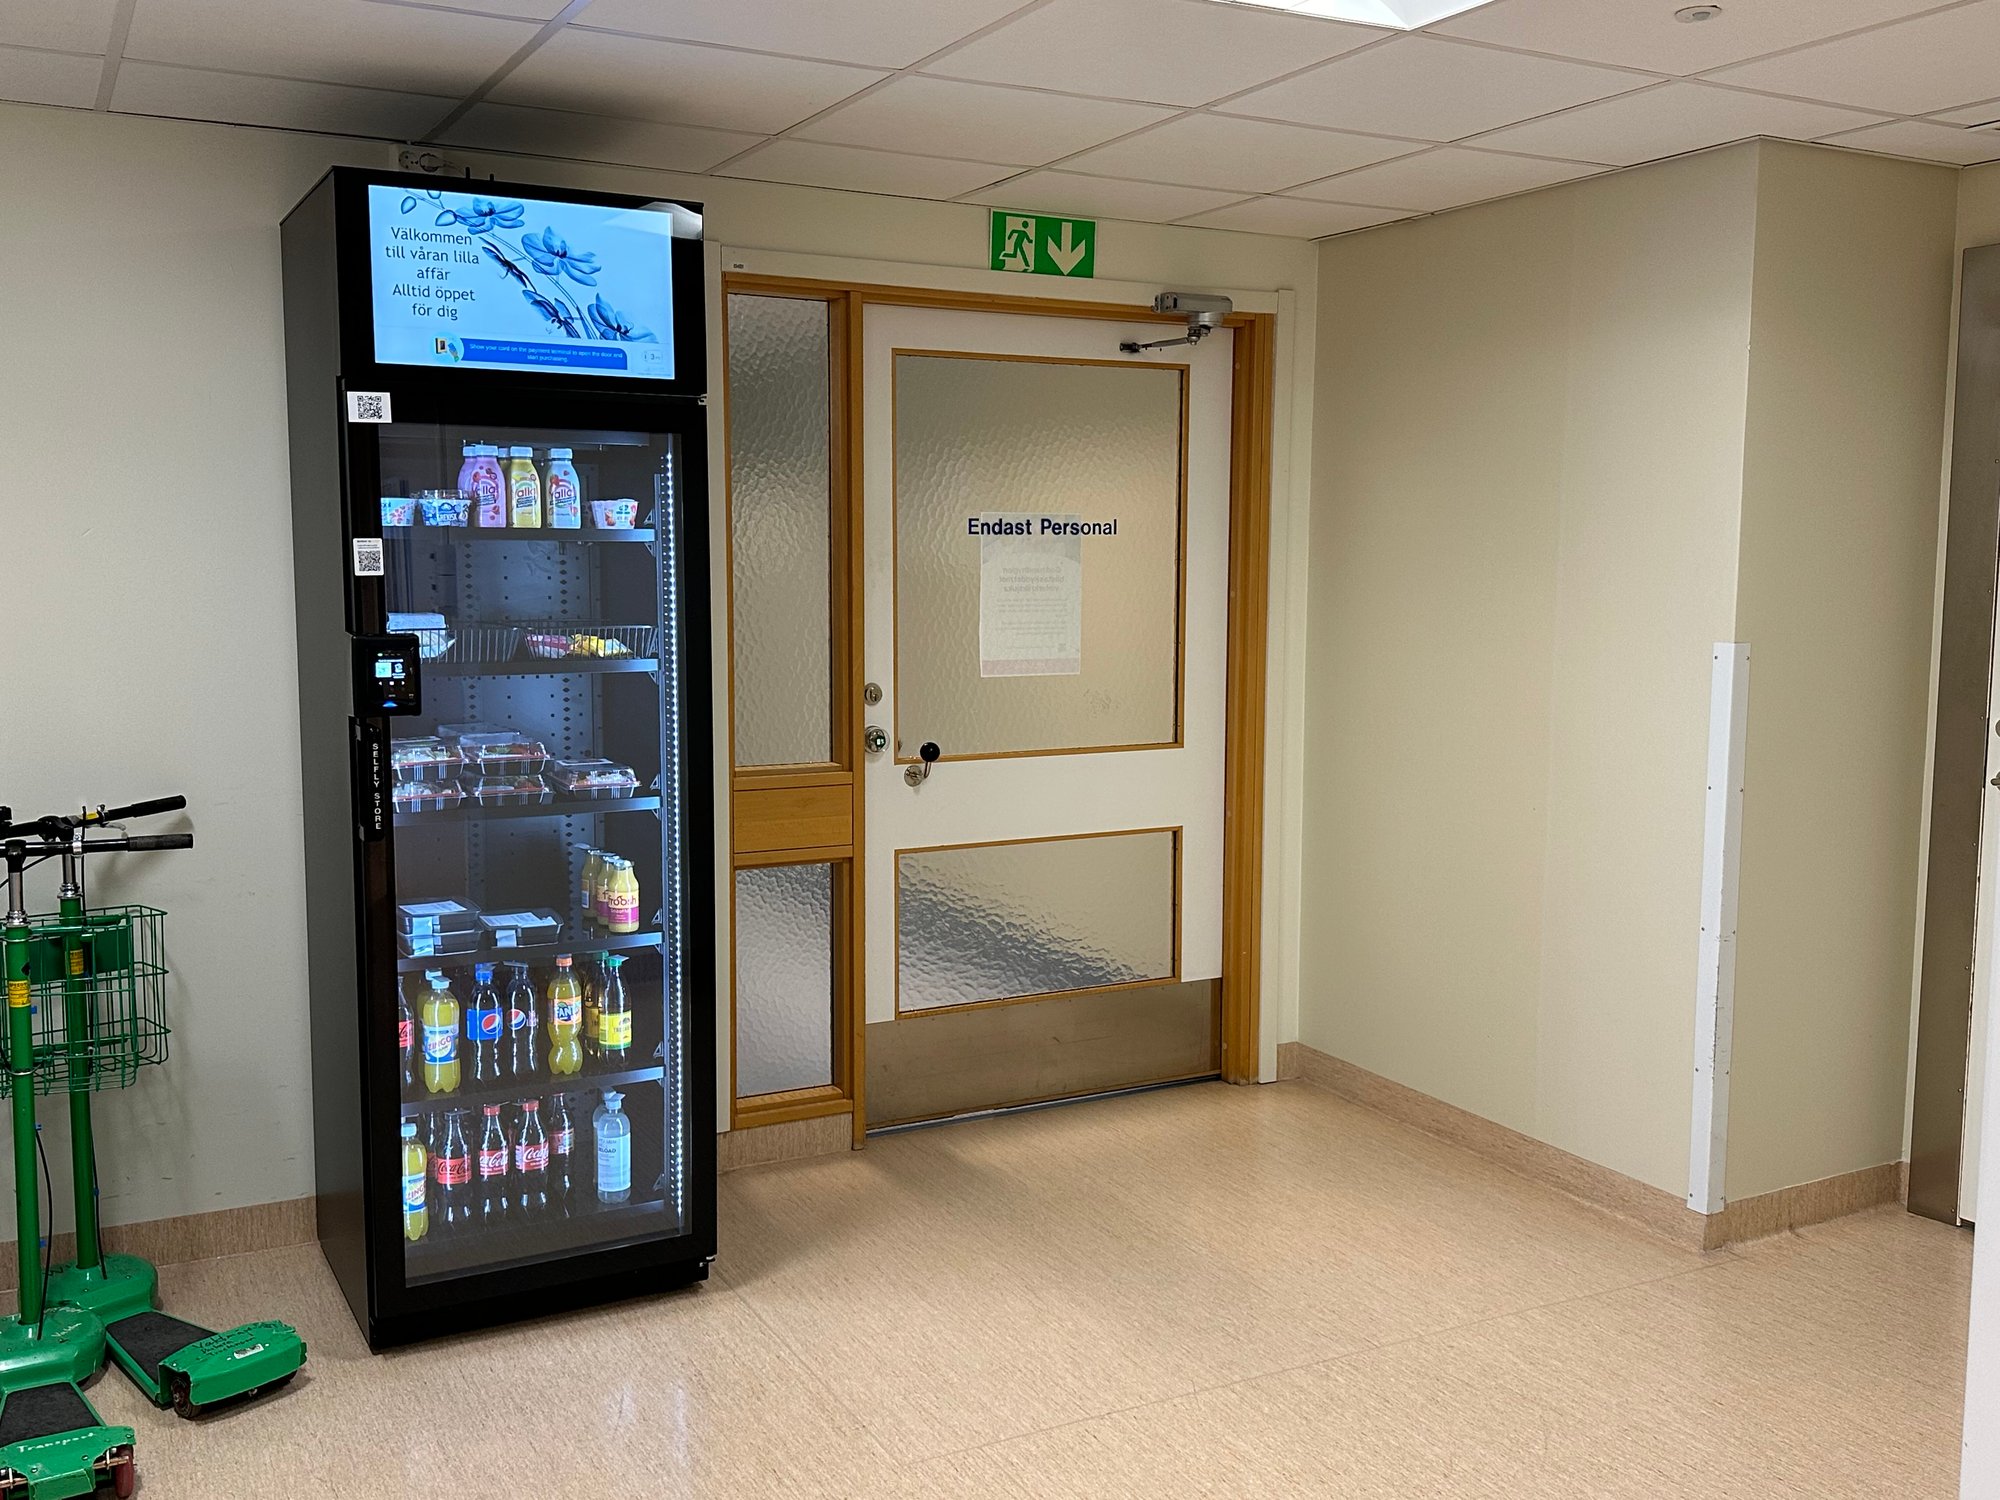 Smart vending machine at Ostersunds sjukhus